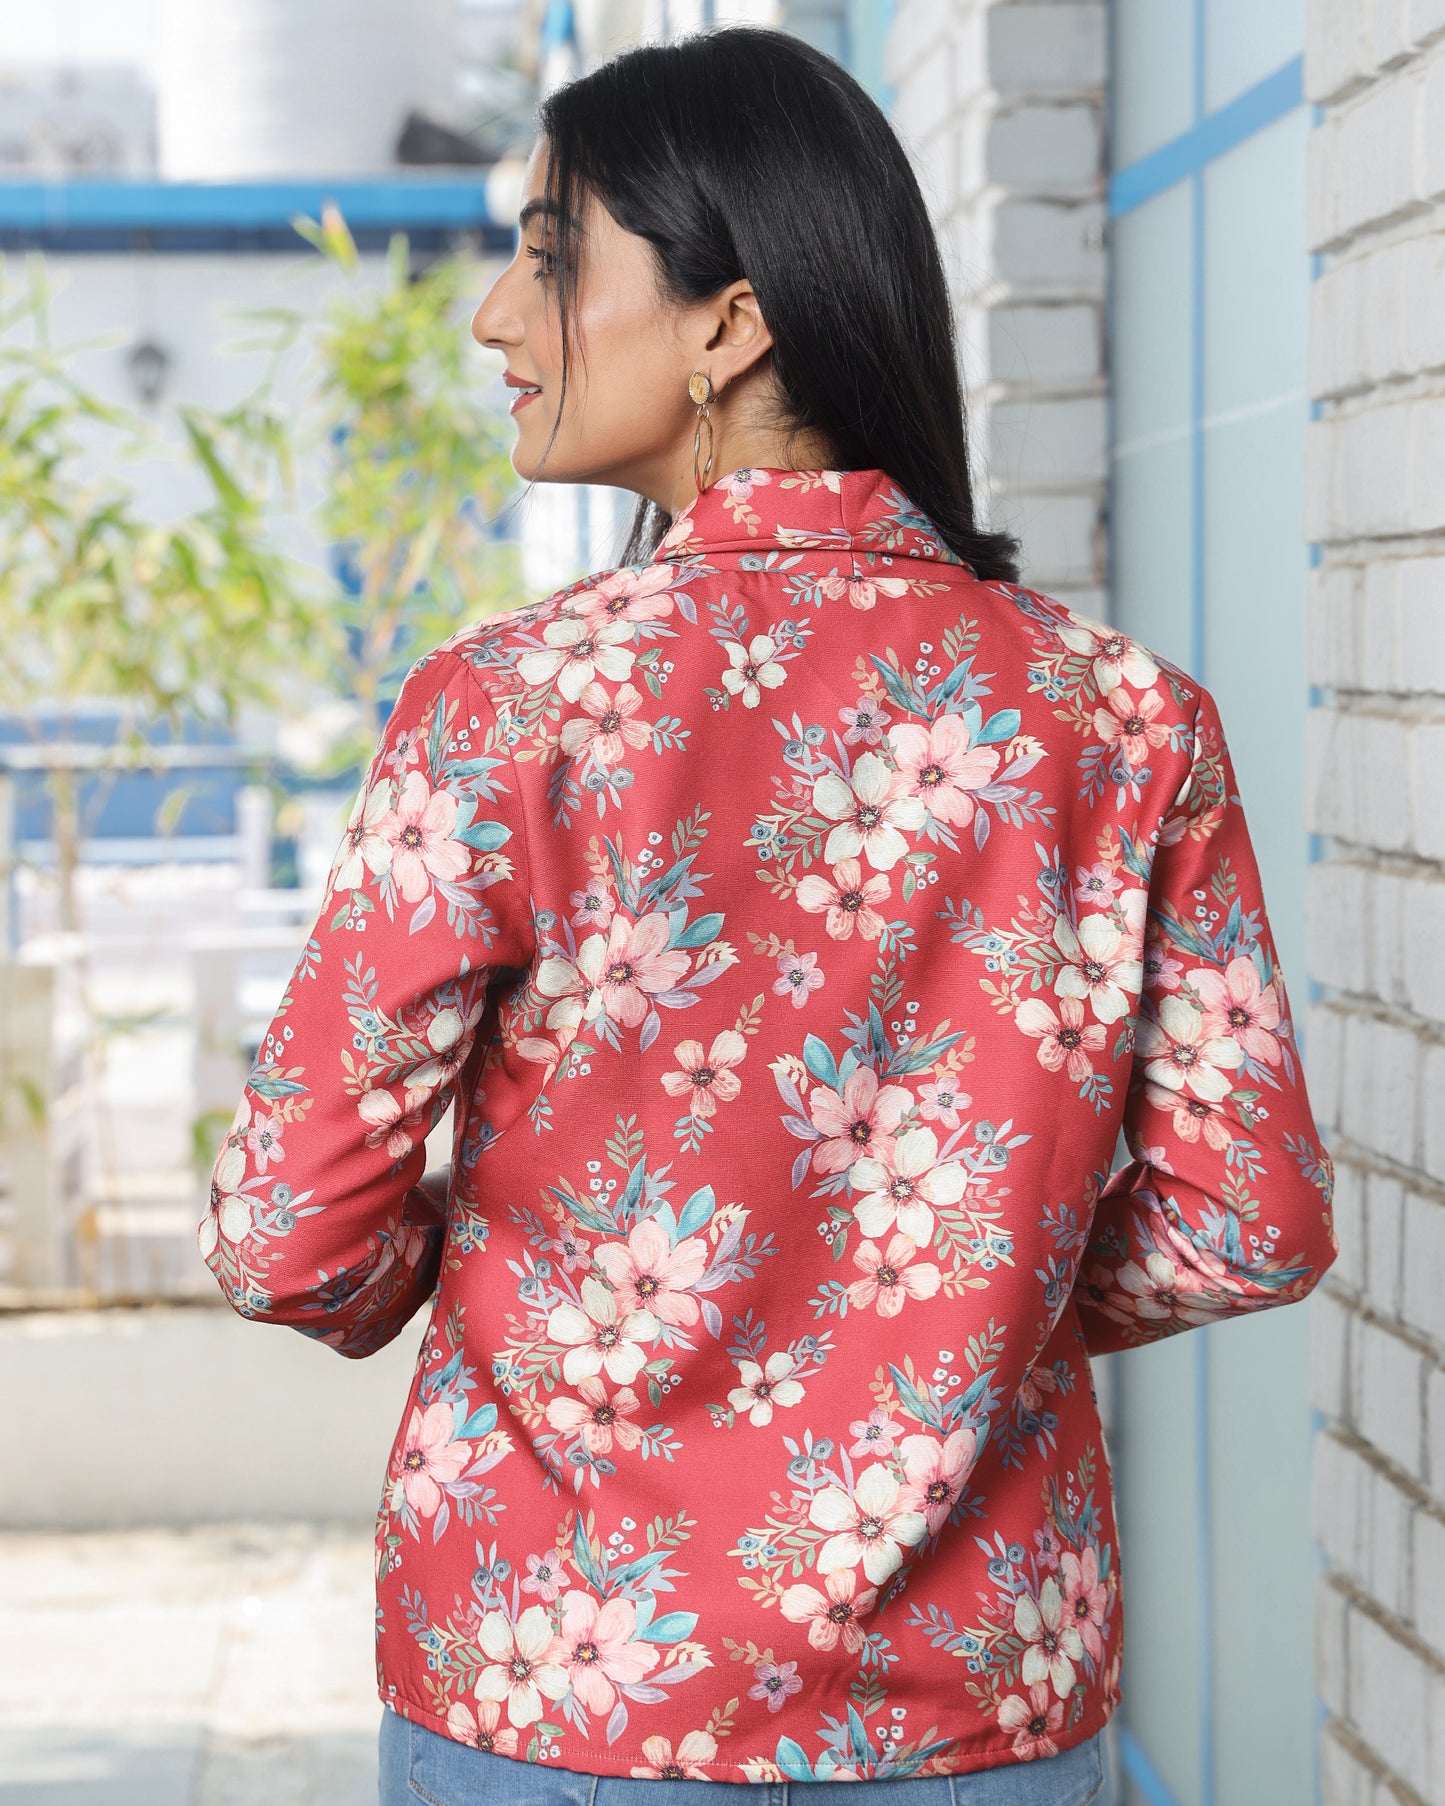 Level Up Your Look: Vintage Floral Women's Jacket